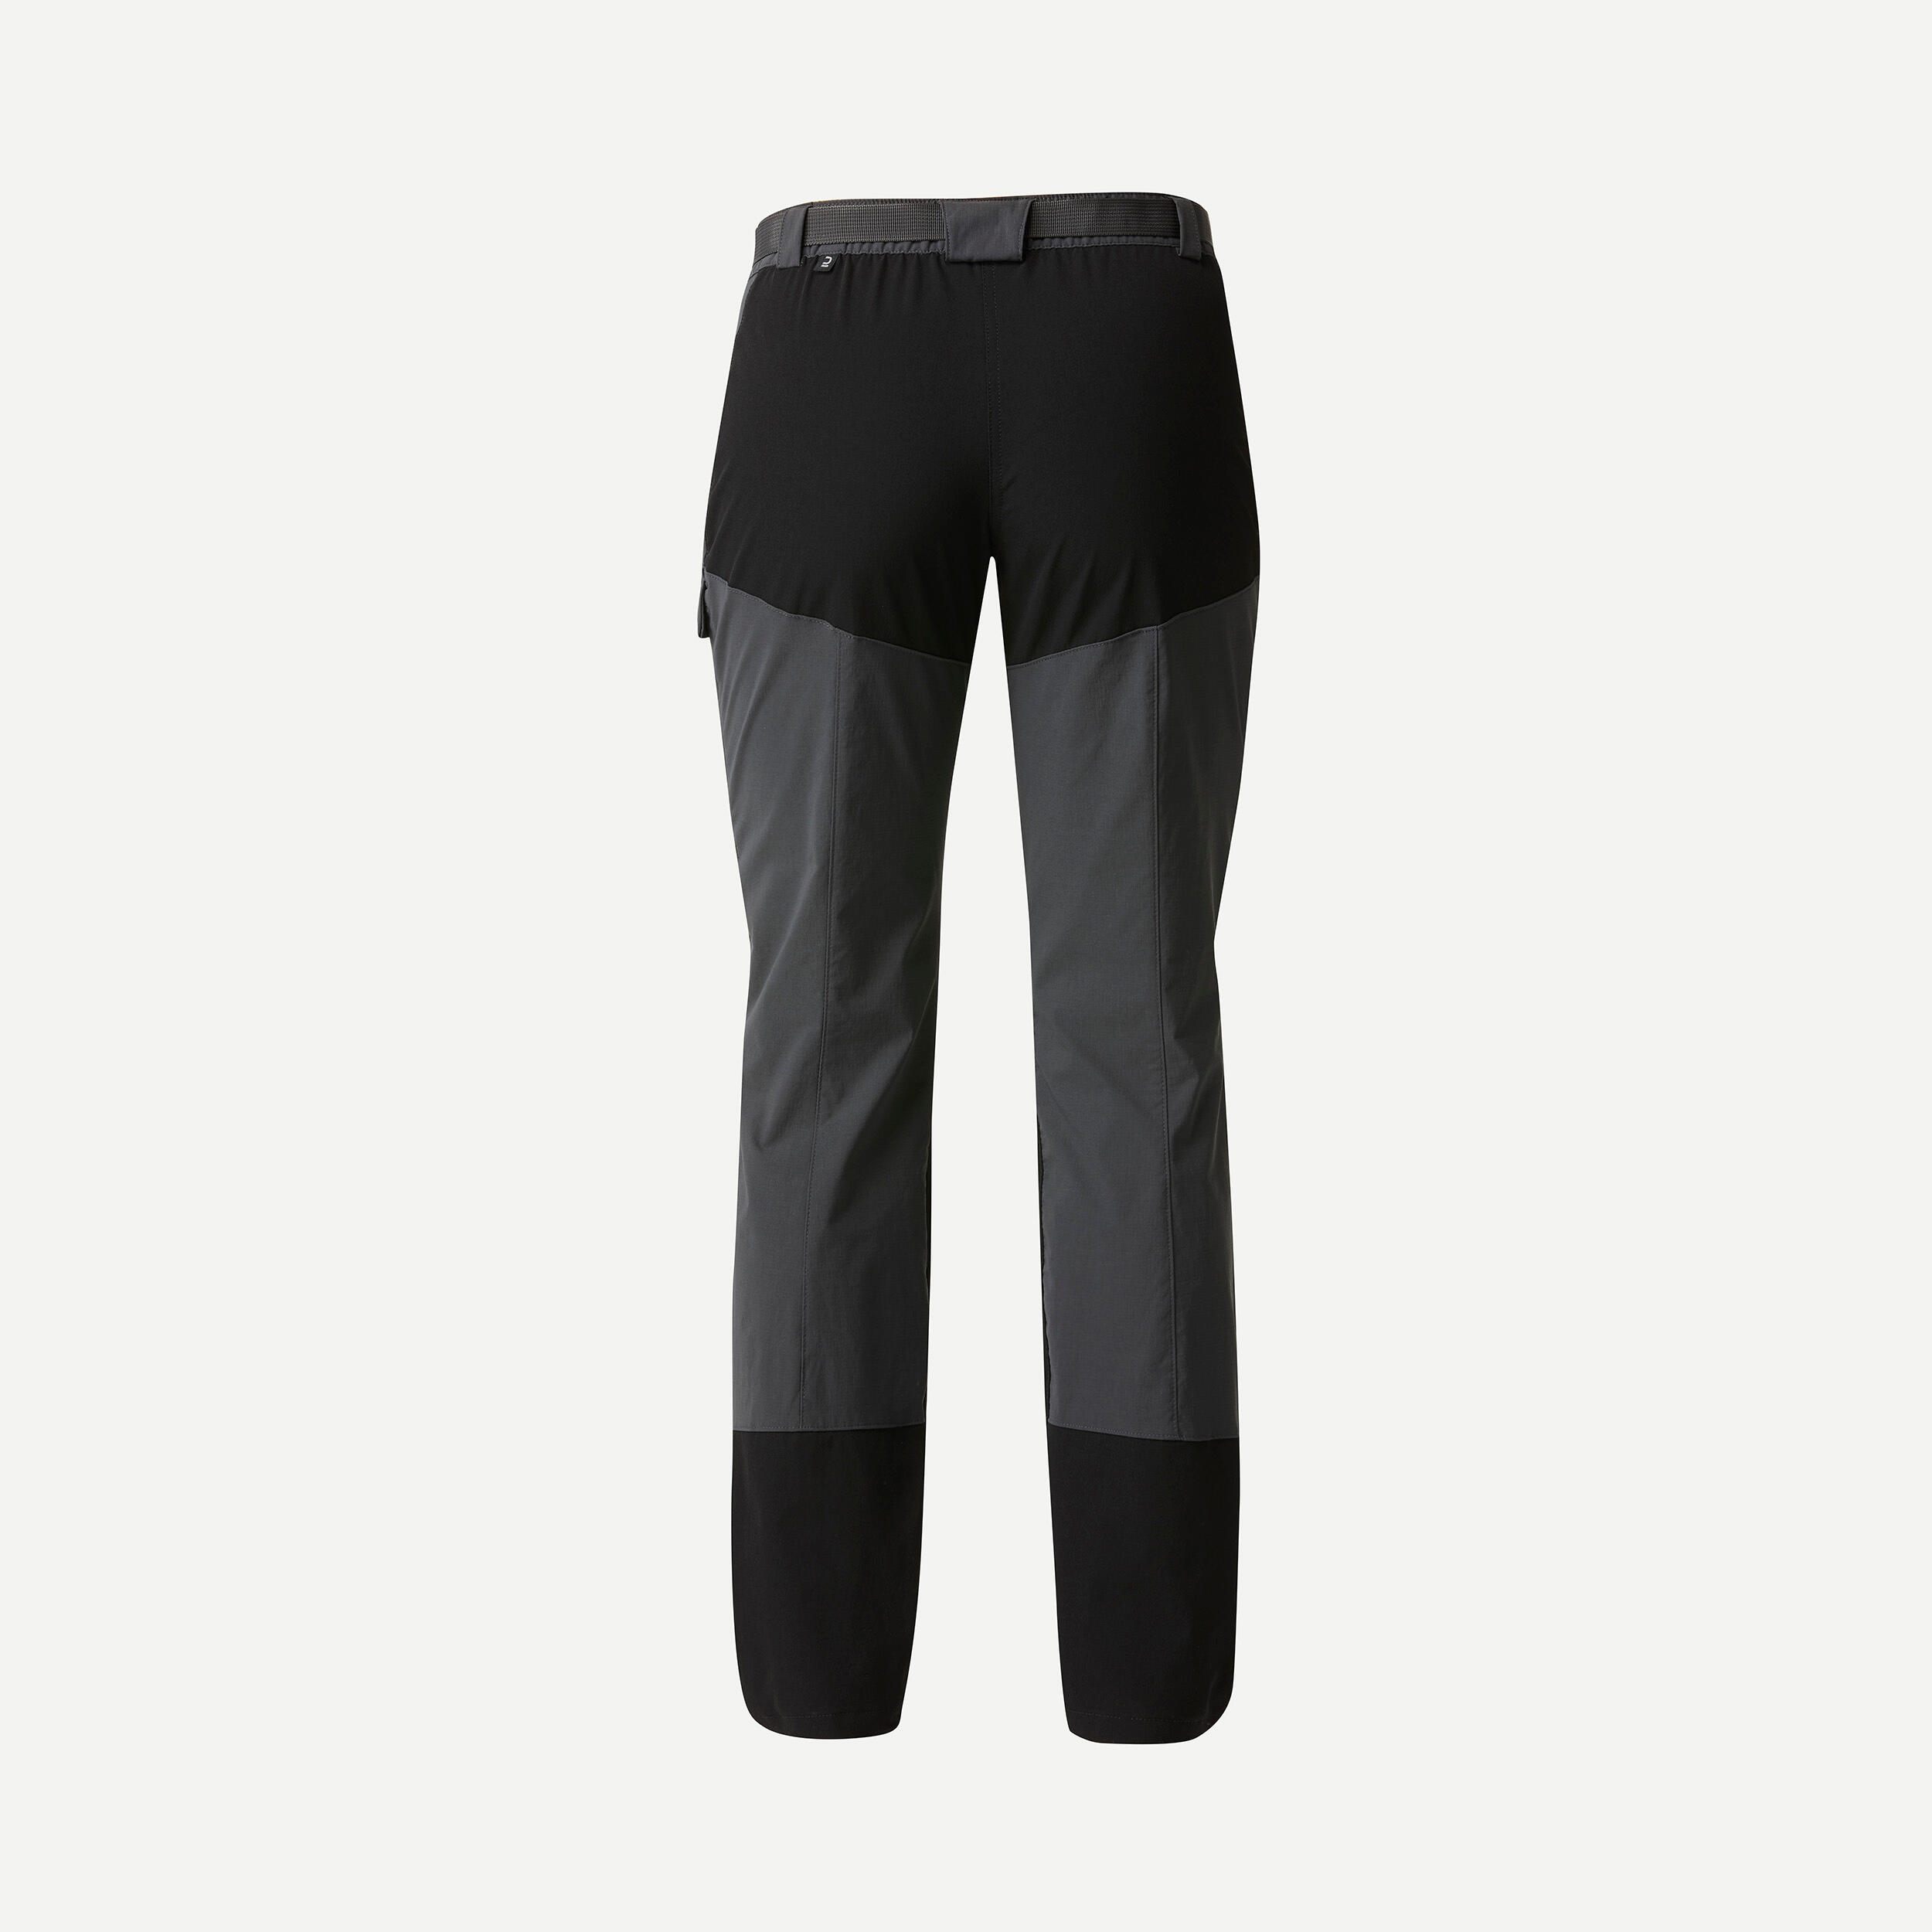 Women's Hiking Shorts - MT 500 Khaki